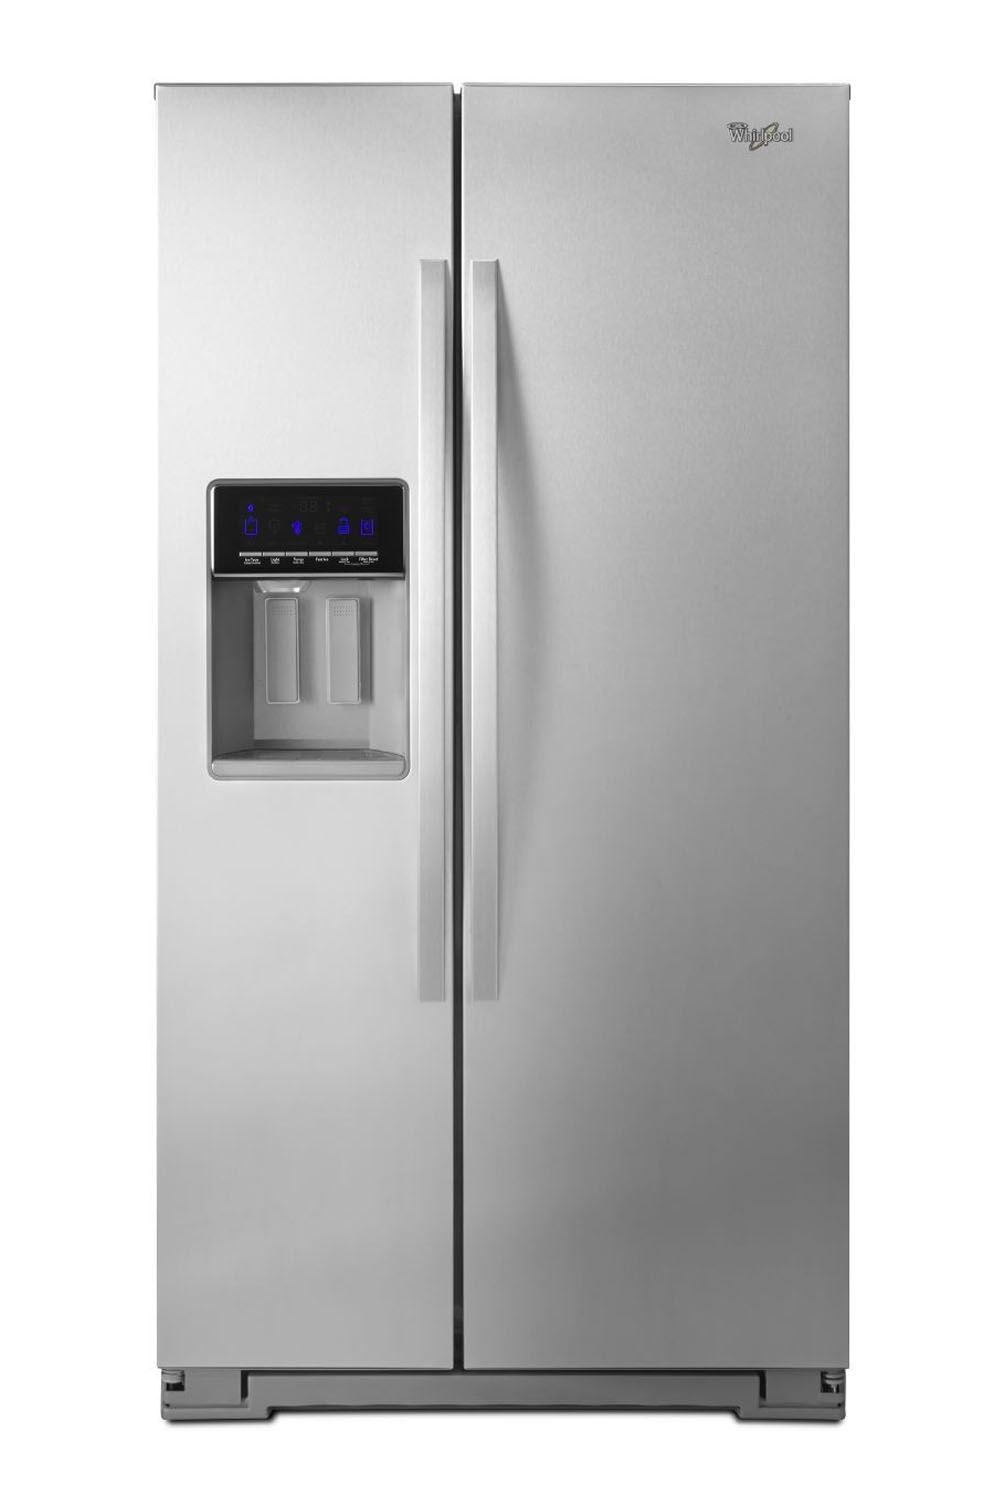 11 Best Refrigerators Reviews 2021 Top Rated Fridges